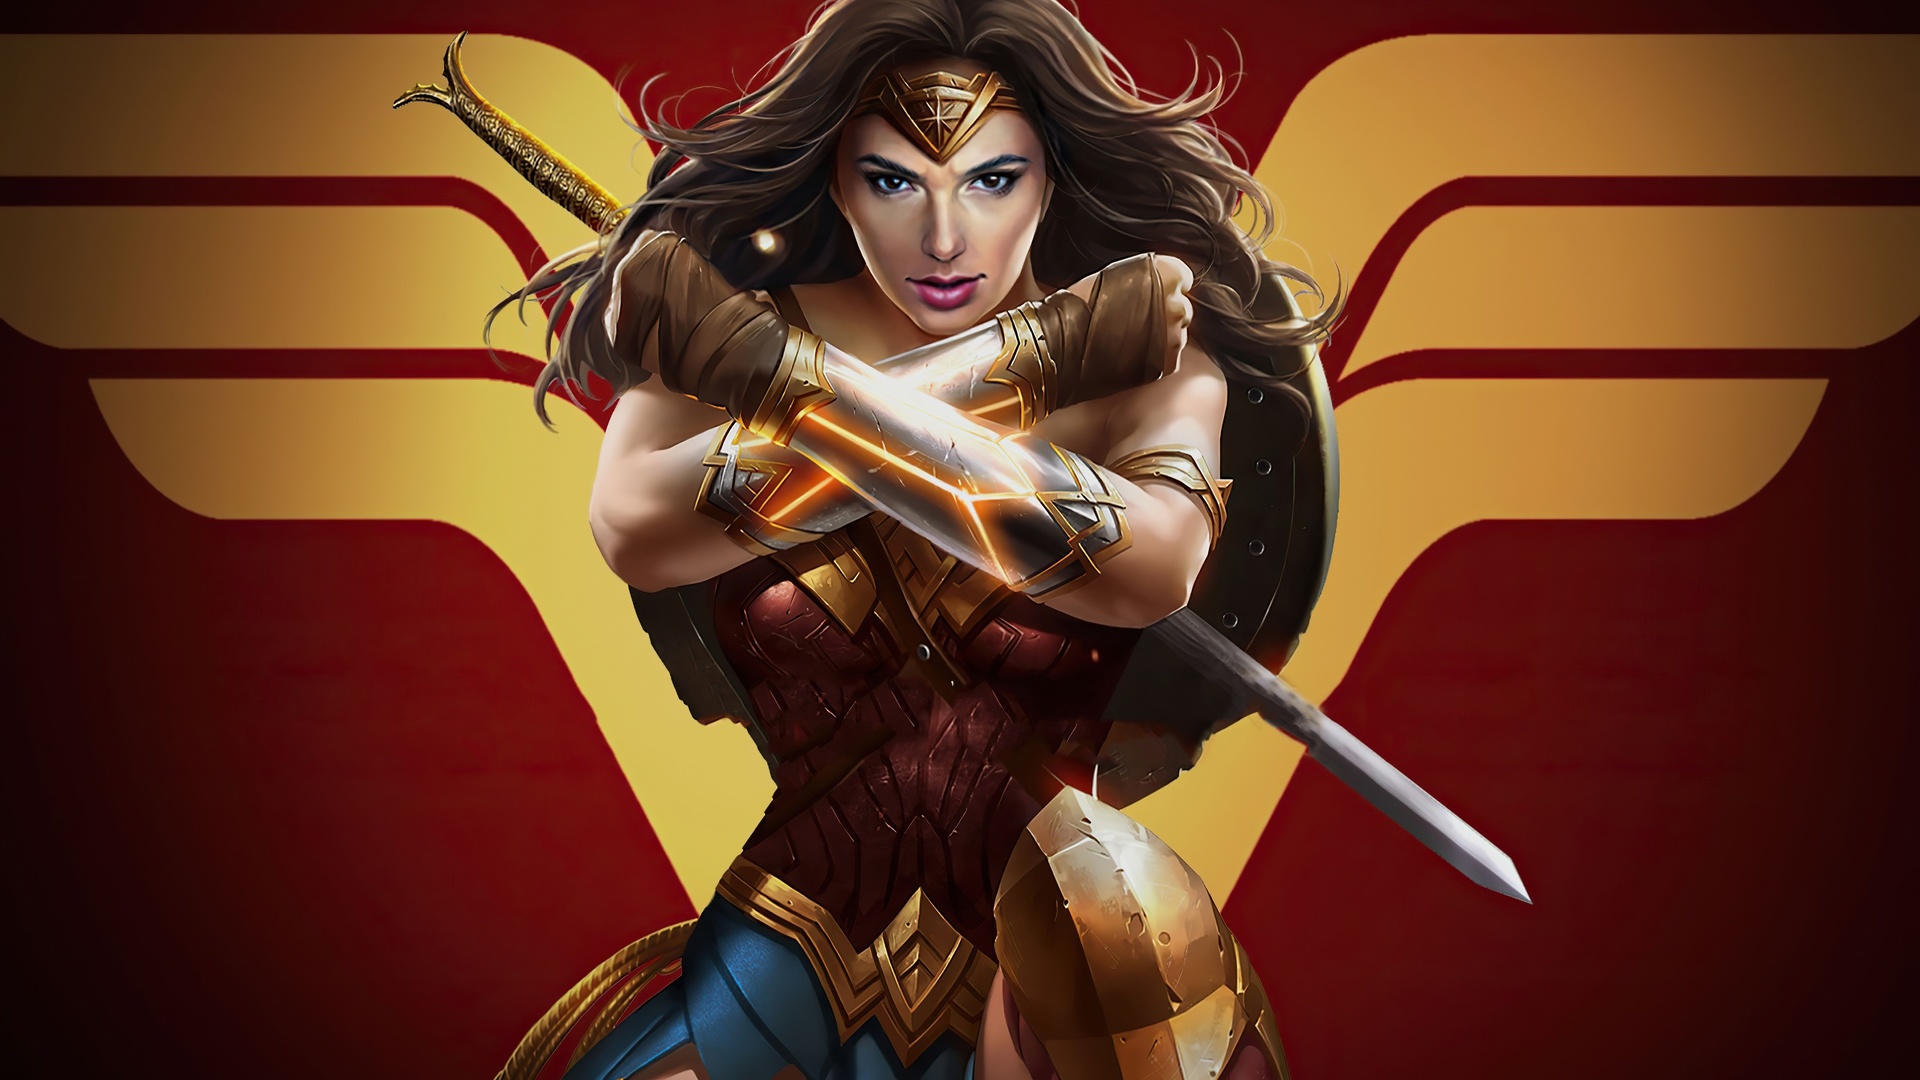 Wonder woman - comics style.jpg